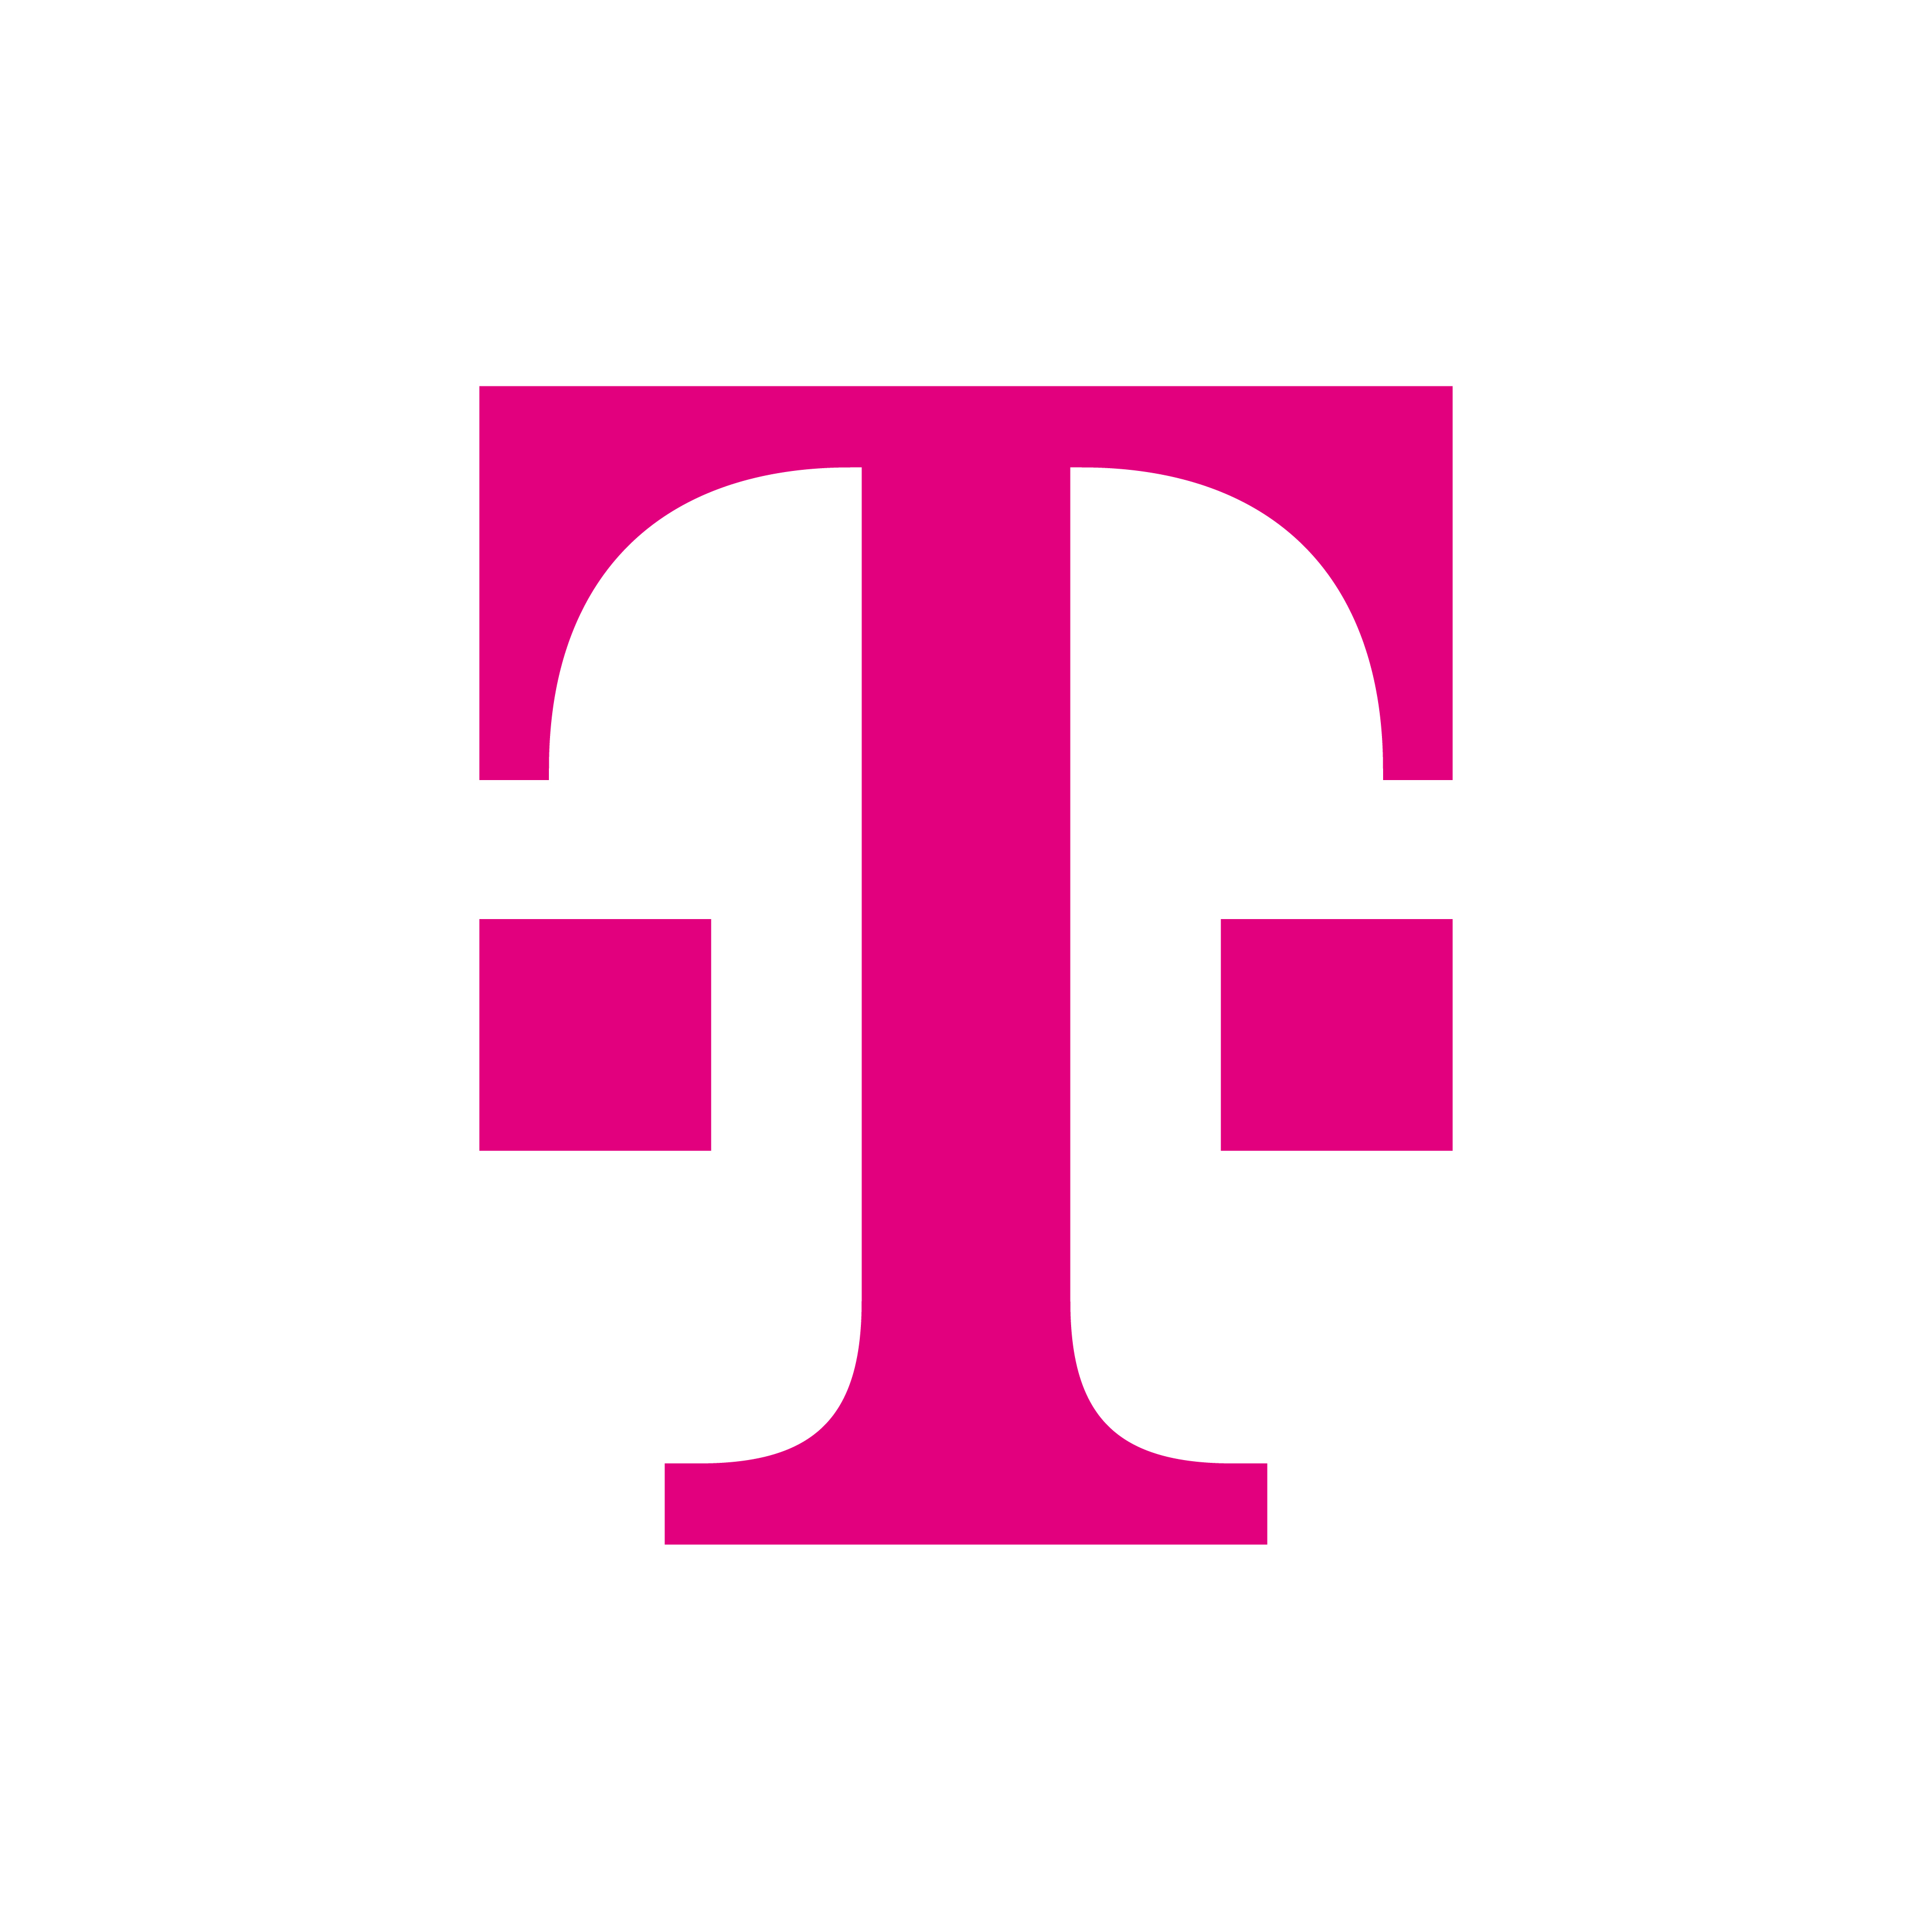 Deutsche Telekom Brand Value & Company Profile Brandirectory